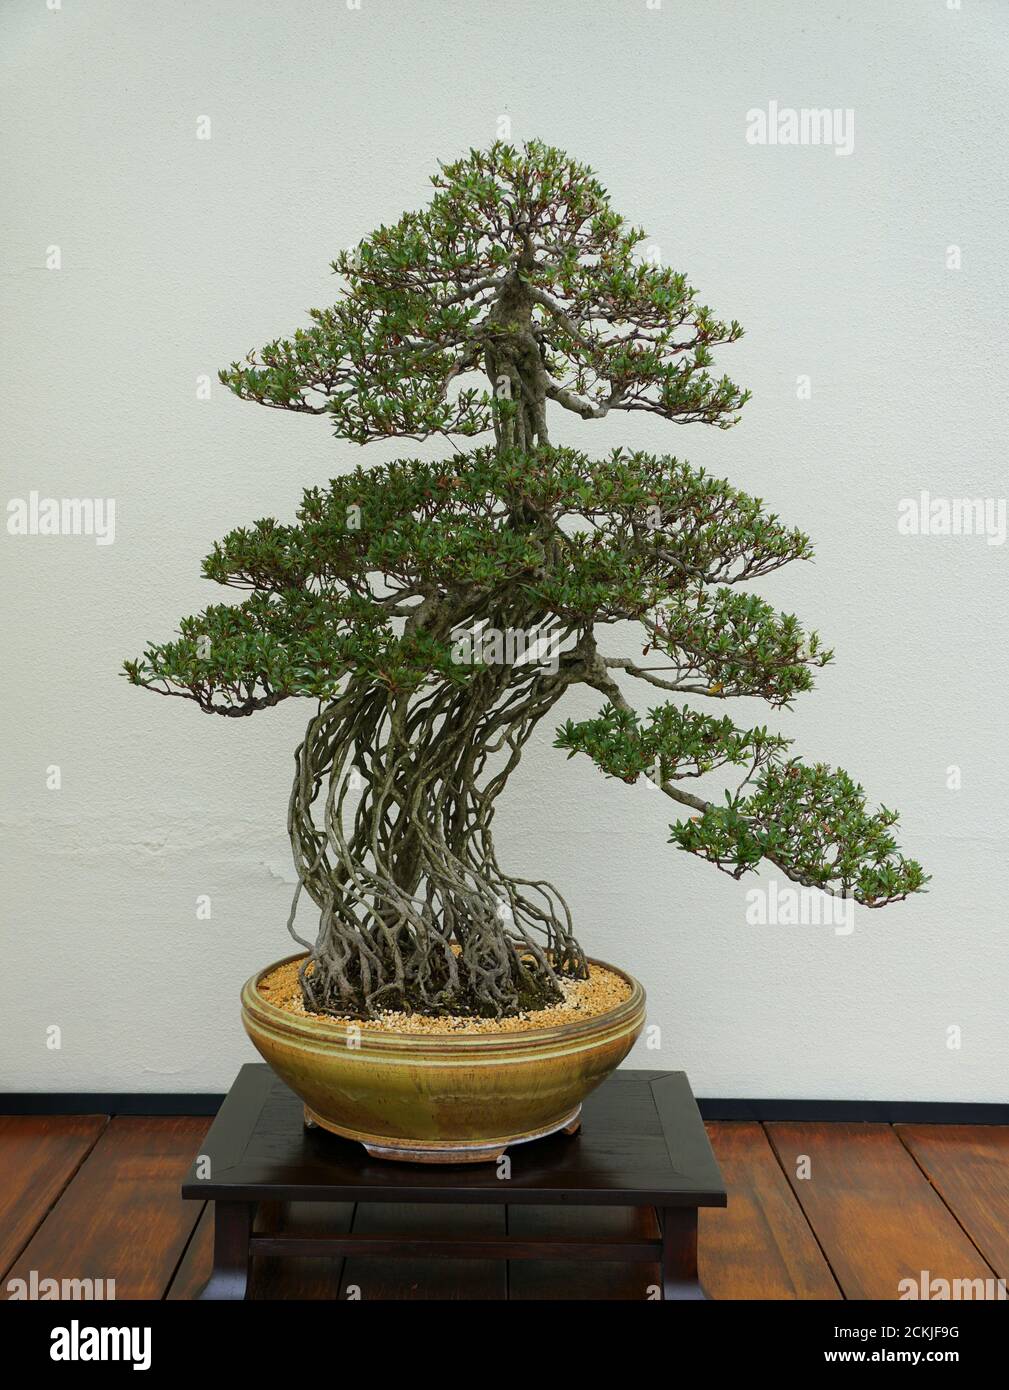 An azalea bonsai tree with green leaves inside a ceramic pot Stock Photo